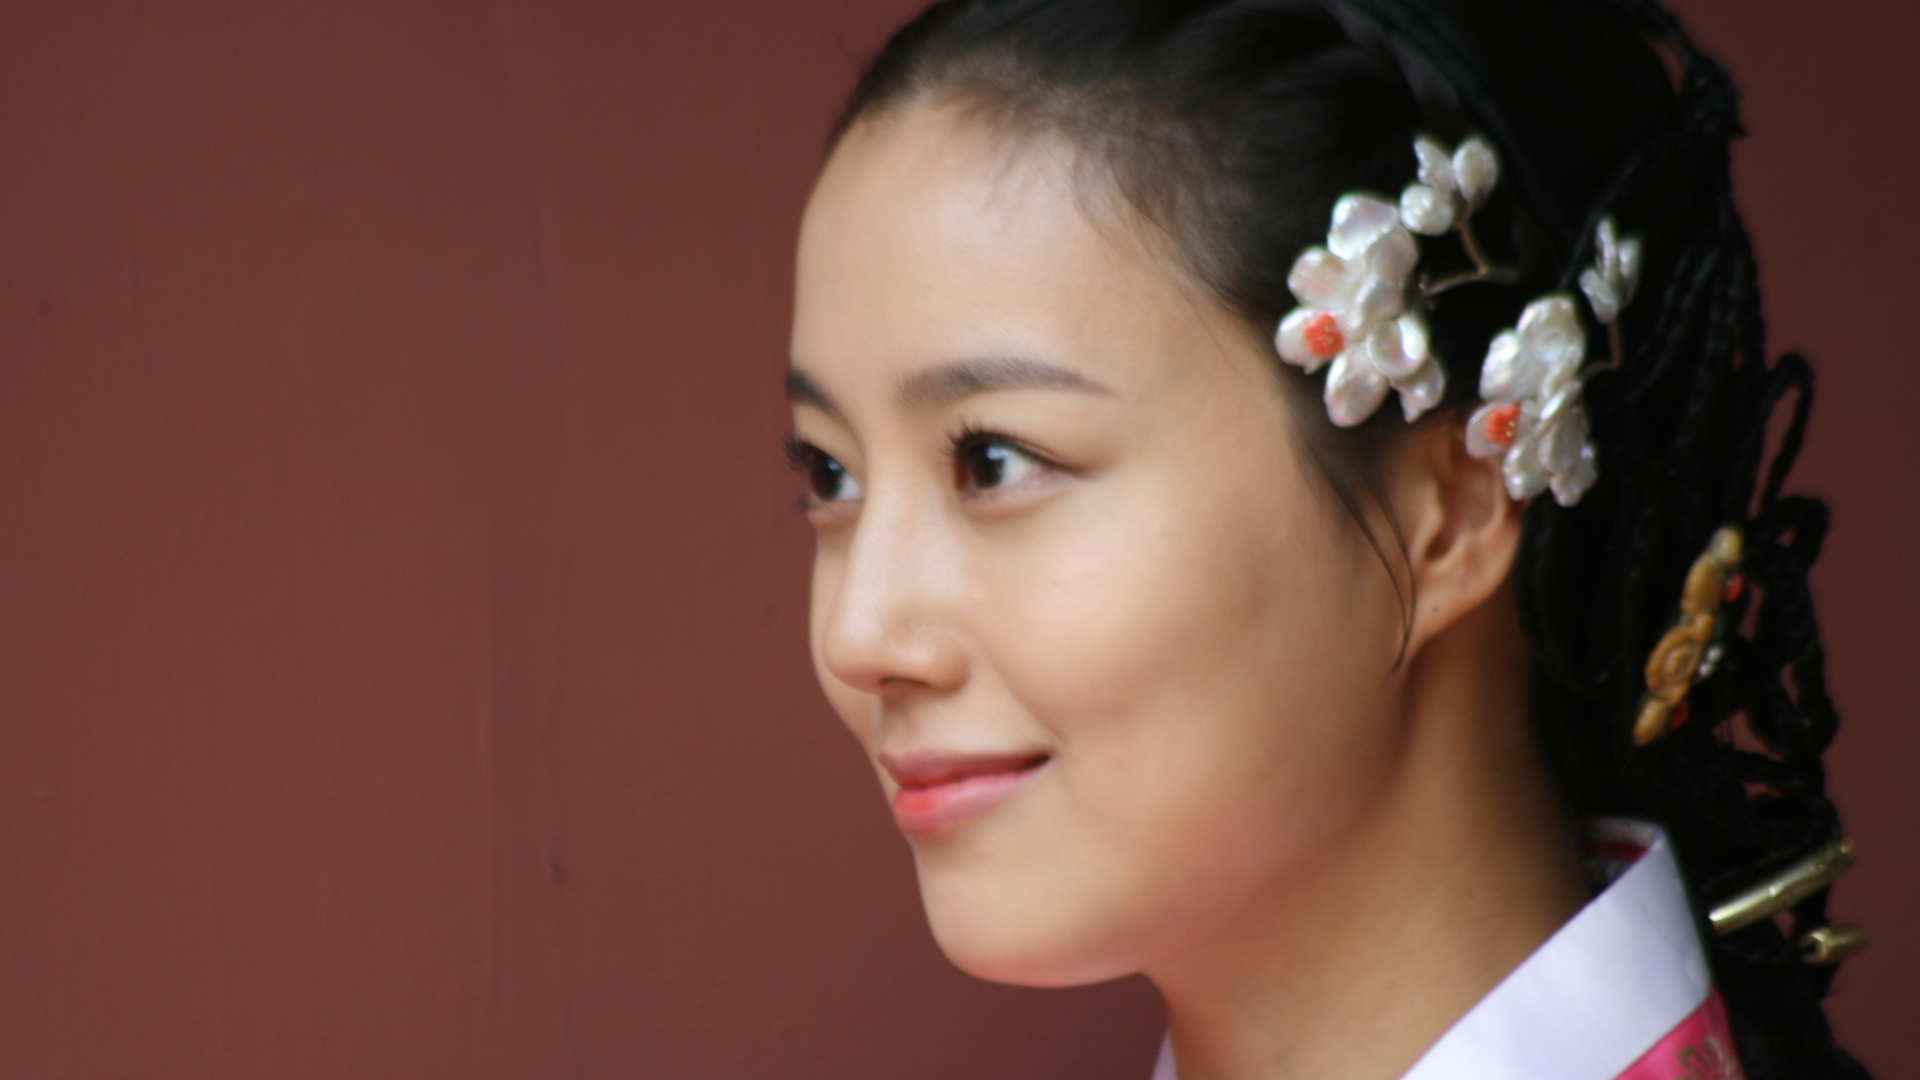 [88 ] Korean Actress Wallpapers On Wallpapersafari